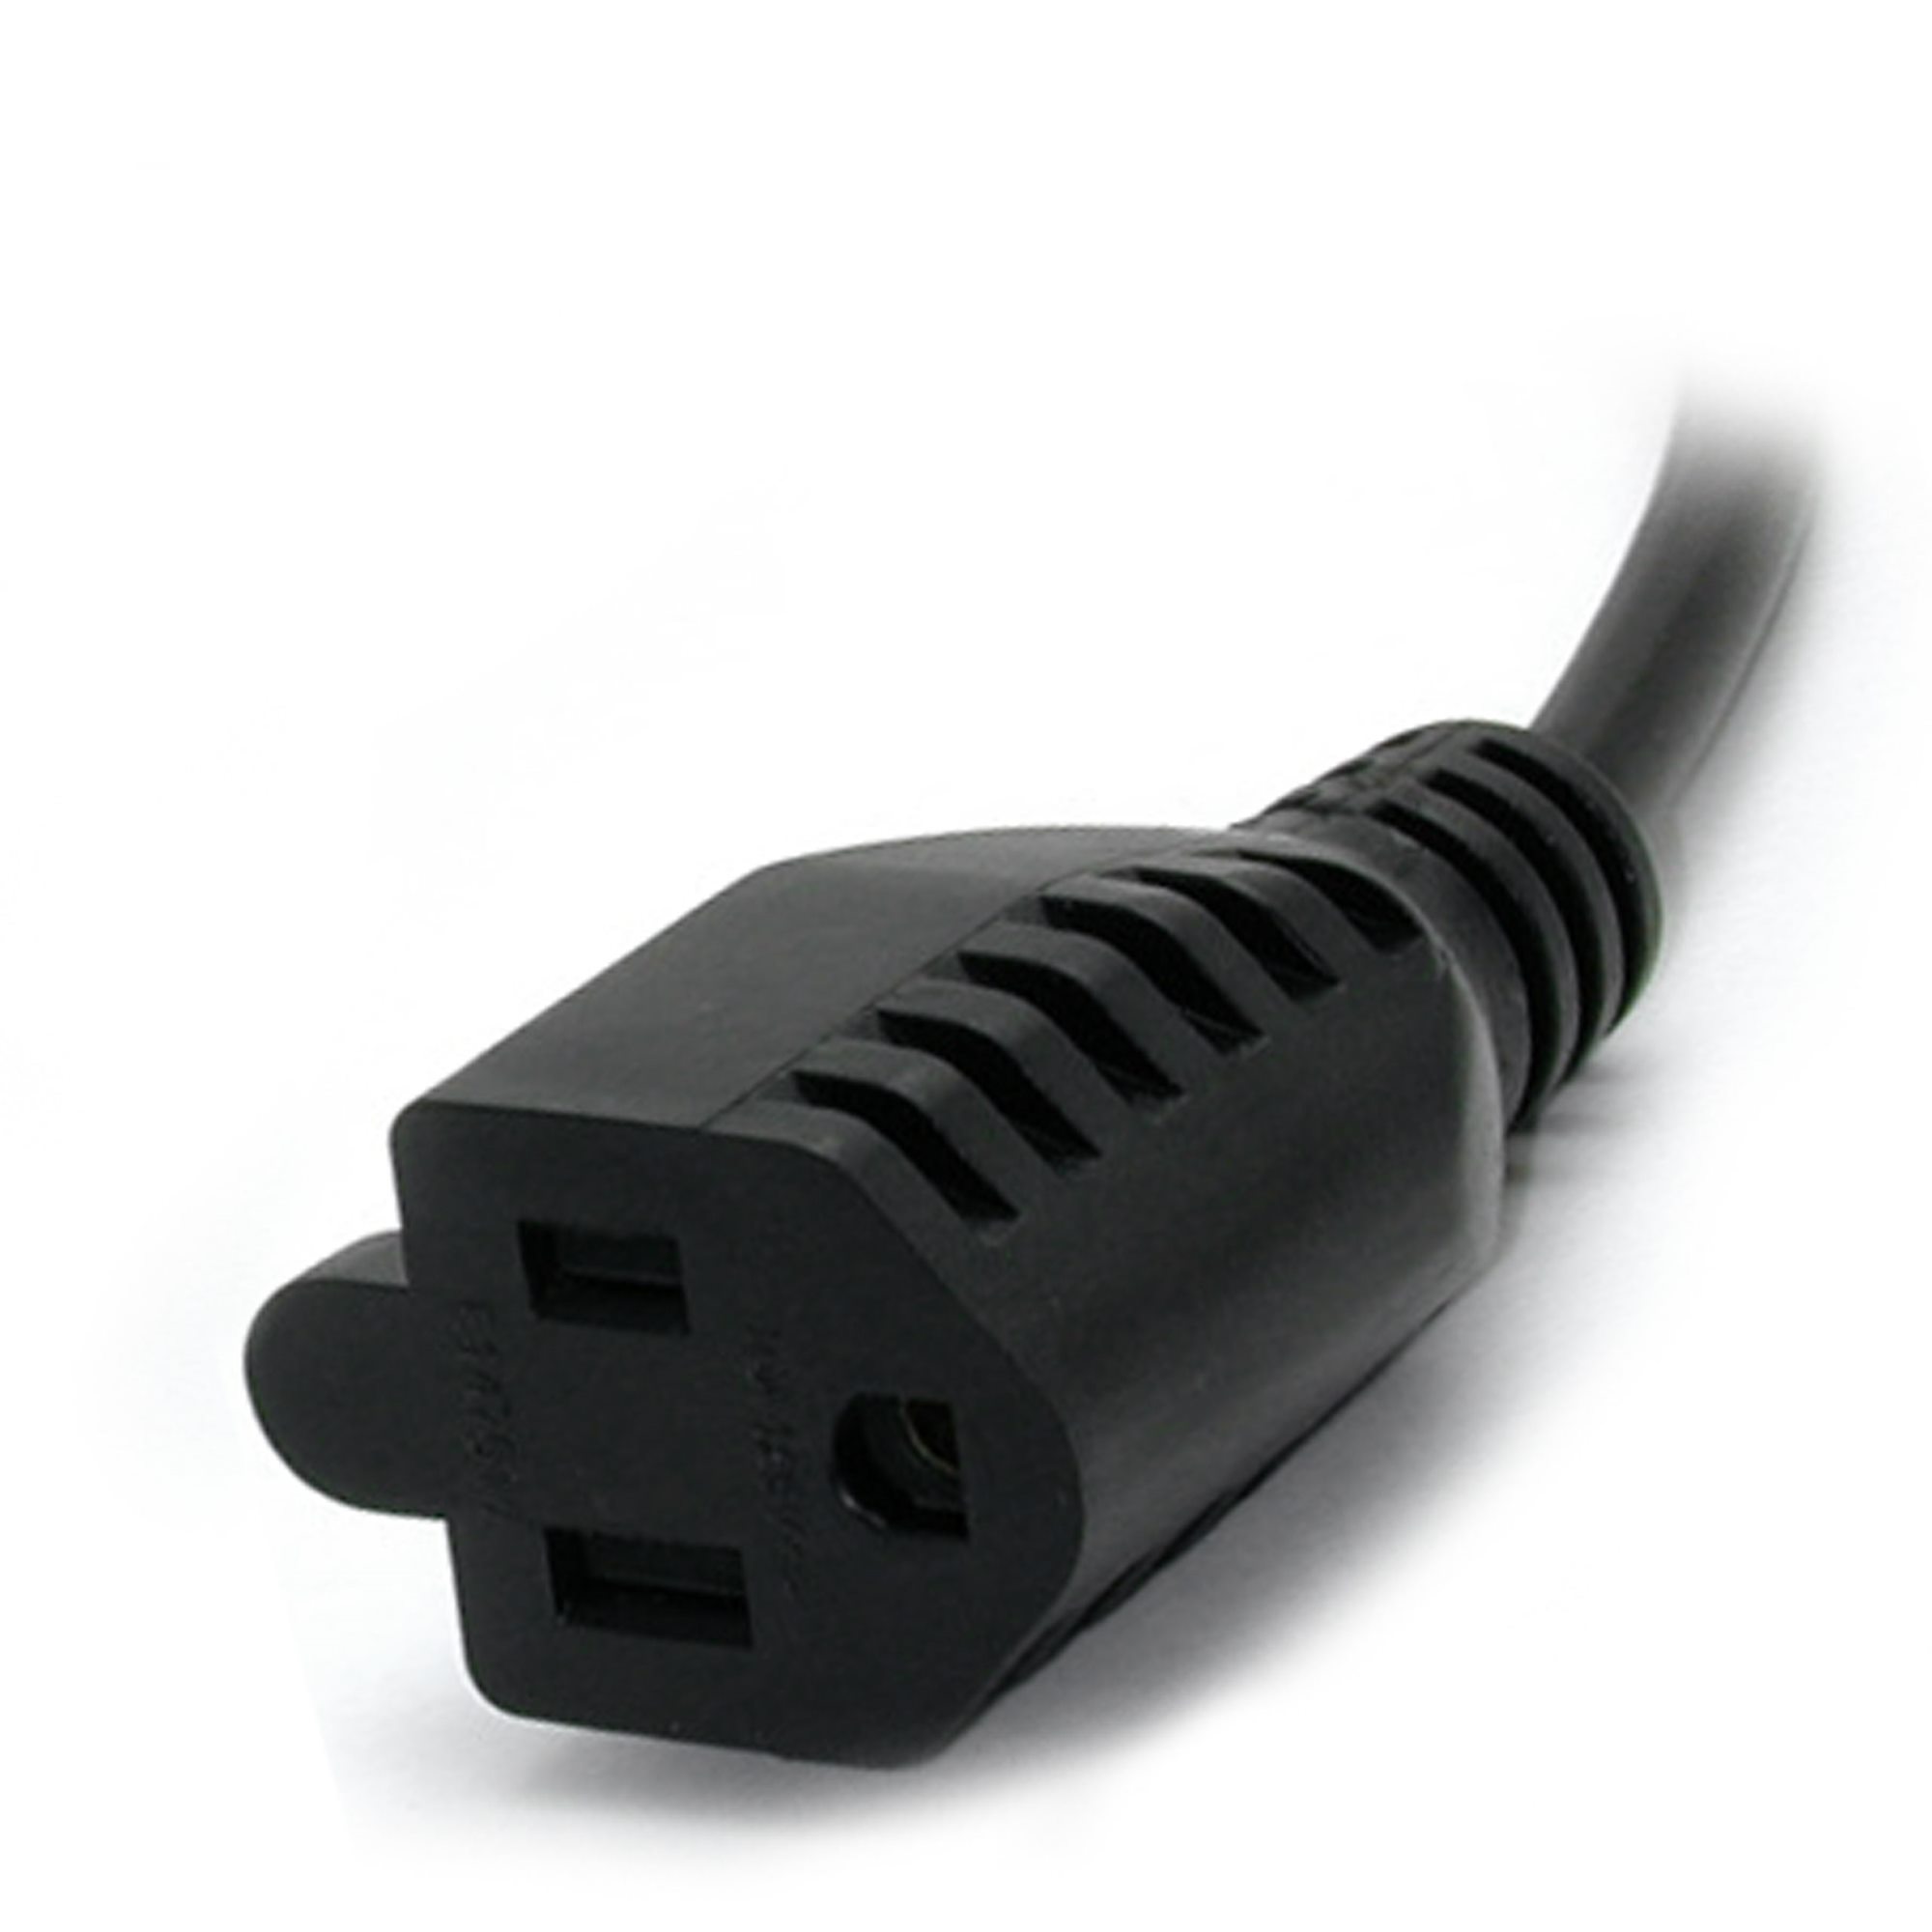 2 Pack zdyCGTime 3 Prong USA C14 to NEMA 5-15R Plug Power Adapter for Standard Computer Power Adapter 10A/250V NEMA 5-15R to IEC 60320-C14 IG-320 